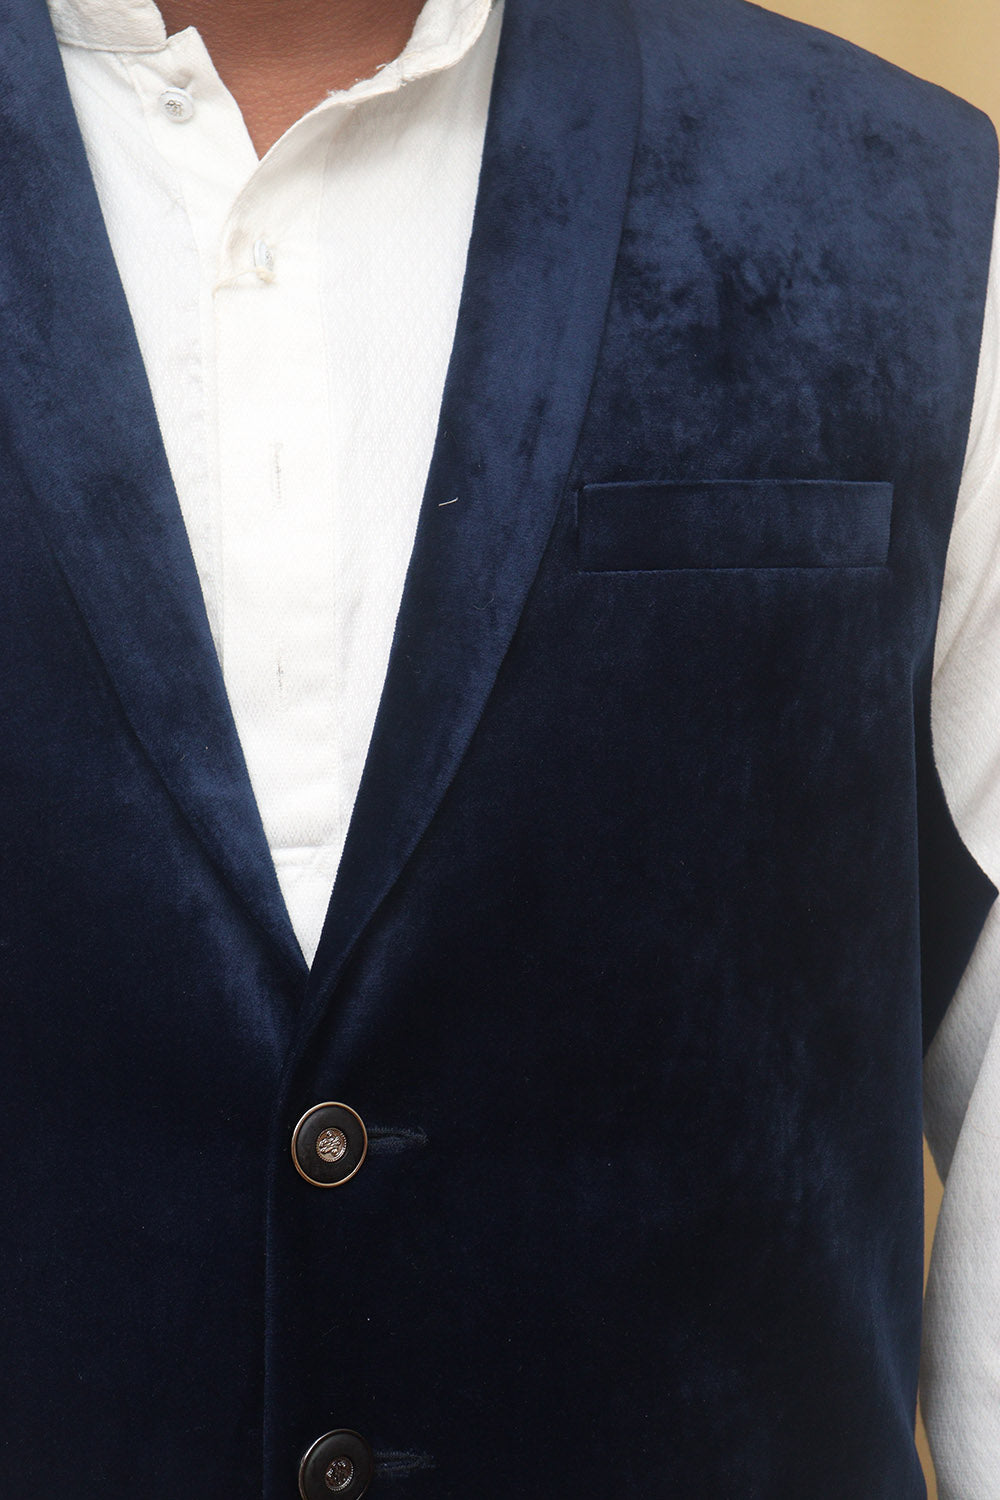 Velvet Navy Blue Women Suits Wedding Slim Fit Tuxedo Double Breasted Blazer  Coat | eBay